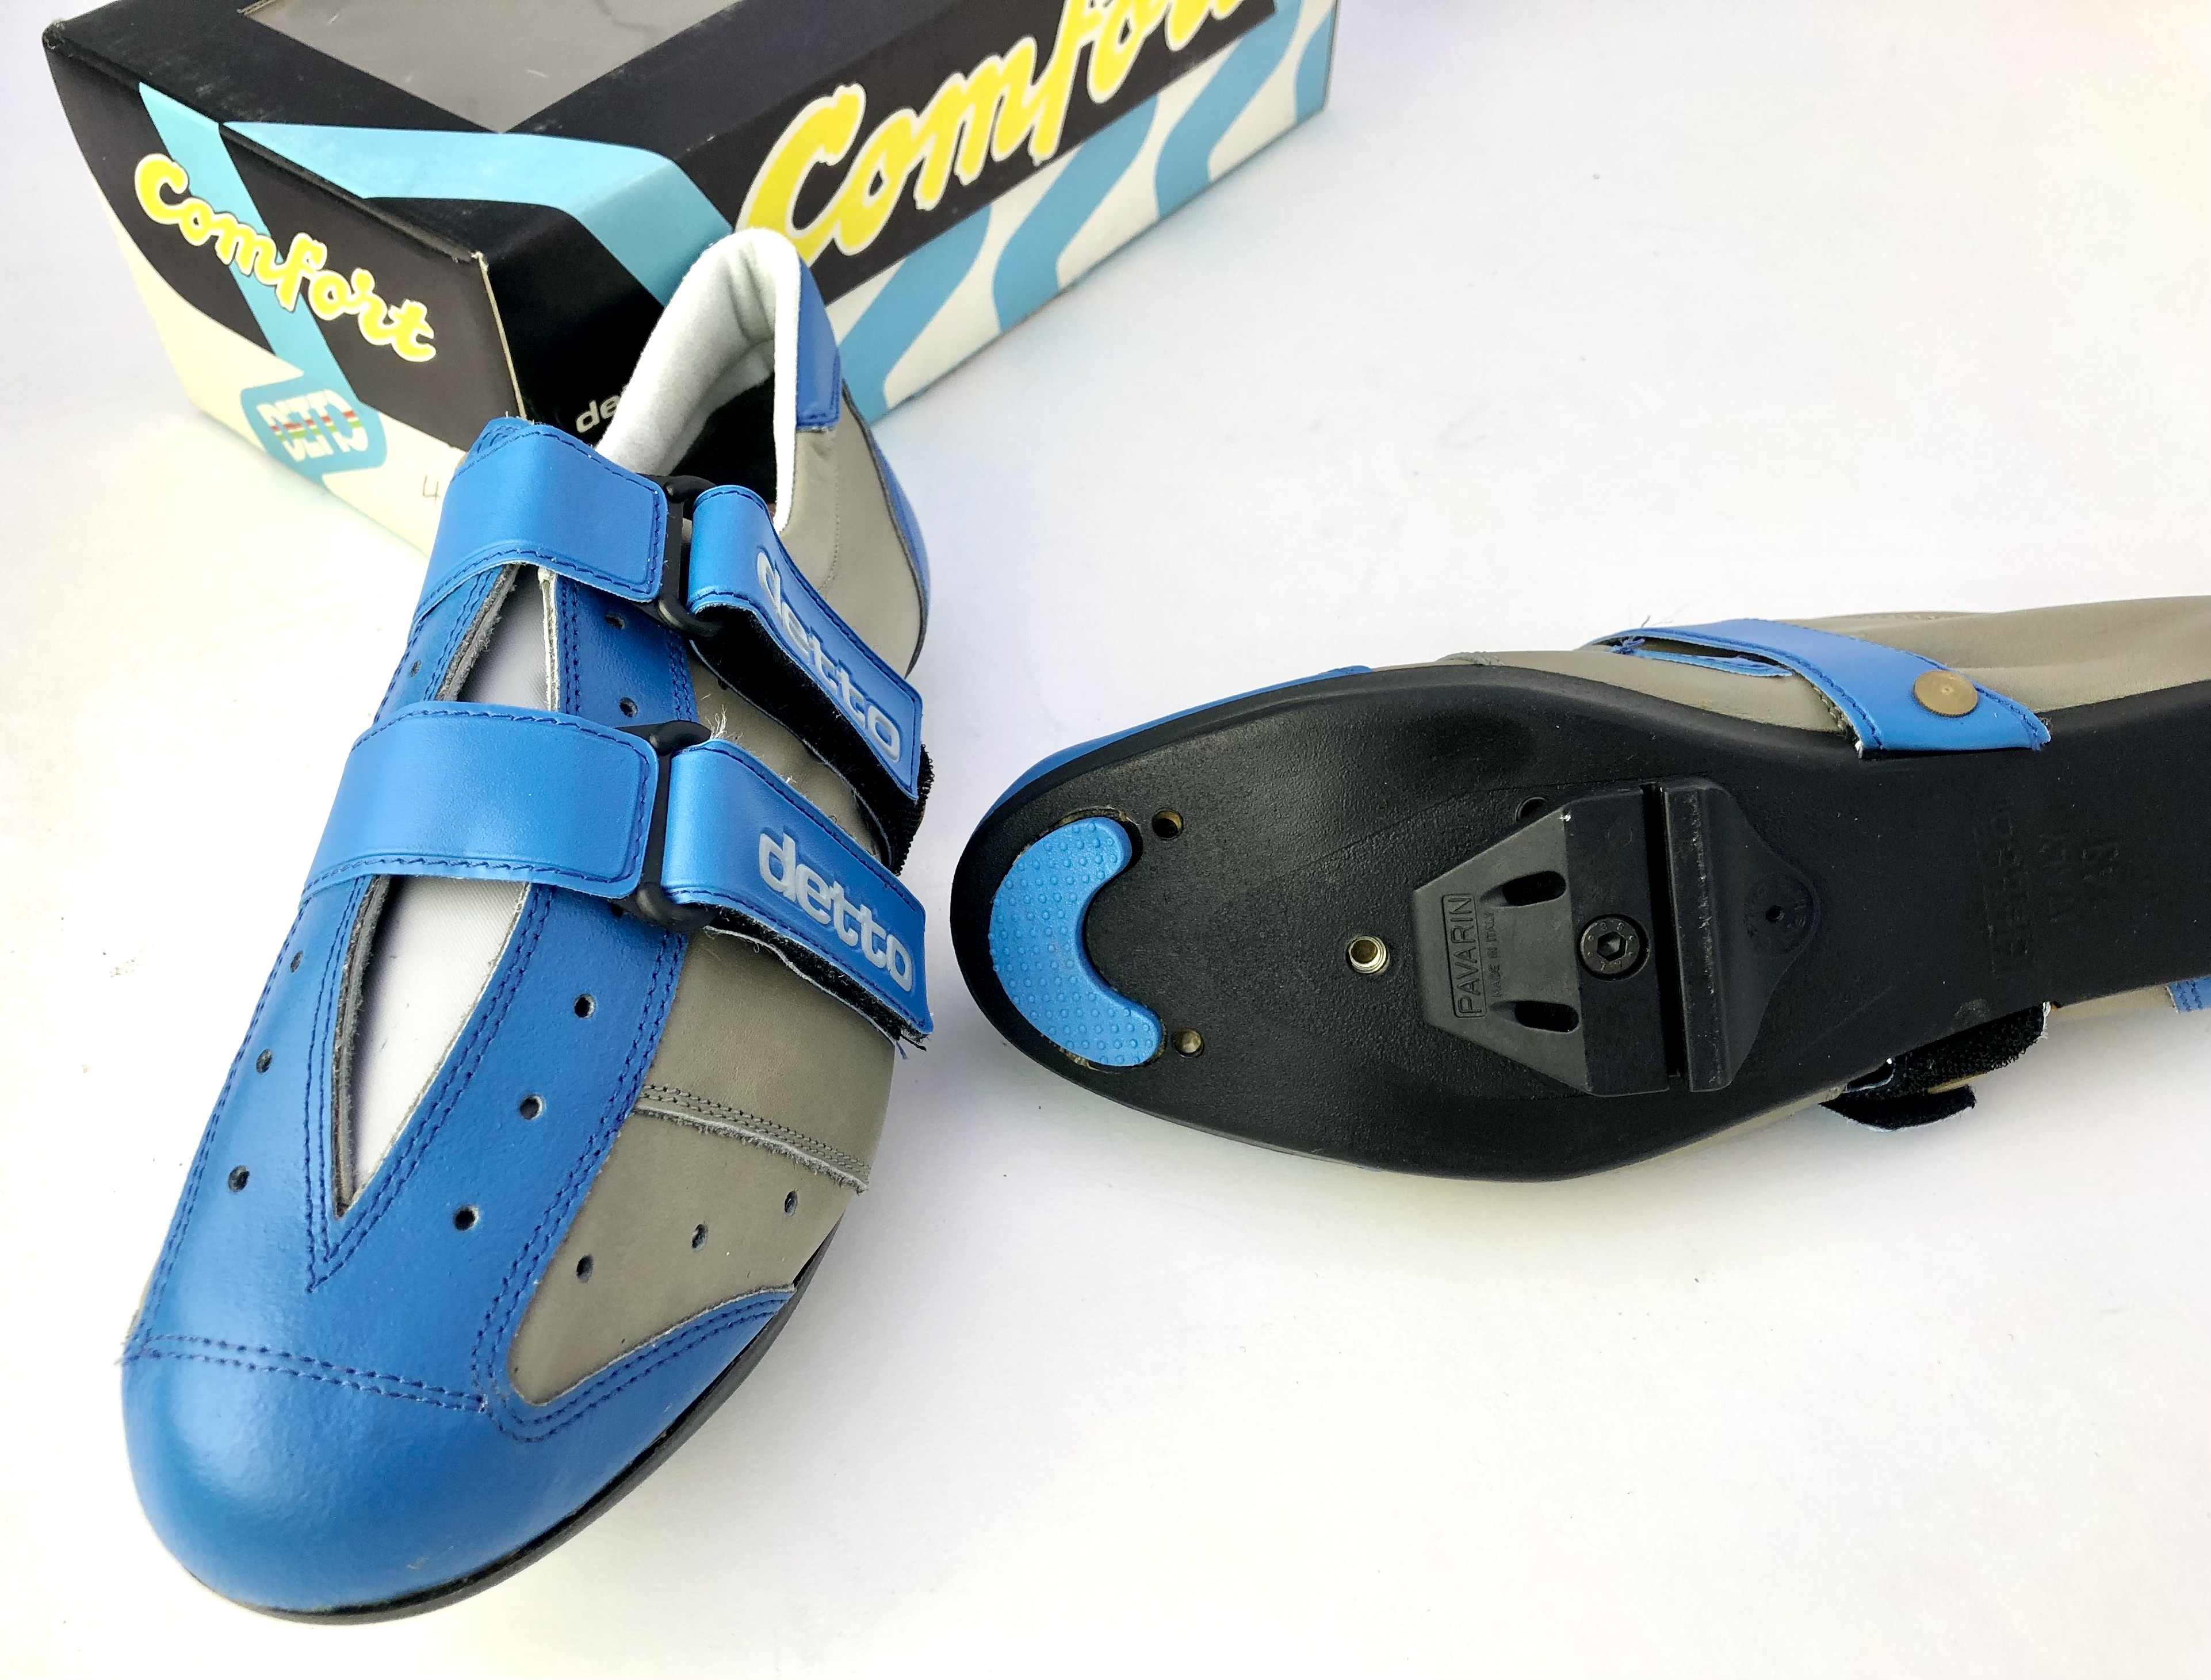 NOS Vintage Detto Pietro Mod. 230 Comfort azul Cycling Shoes Size 39